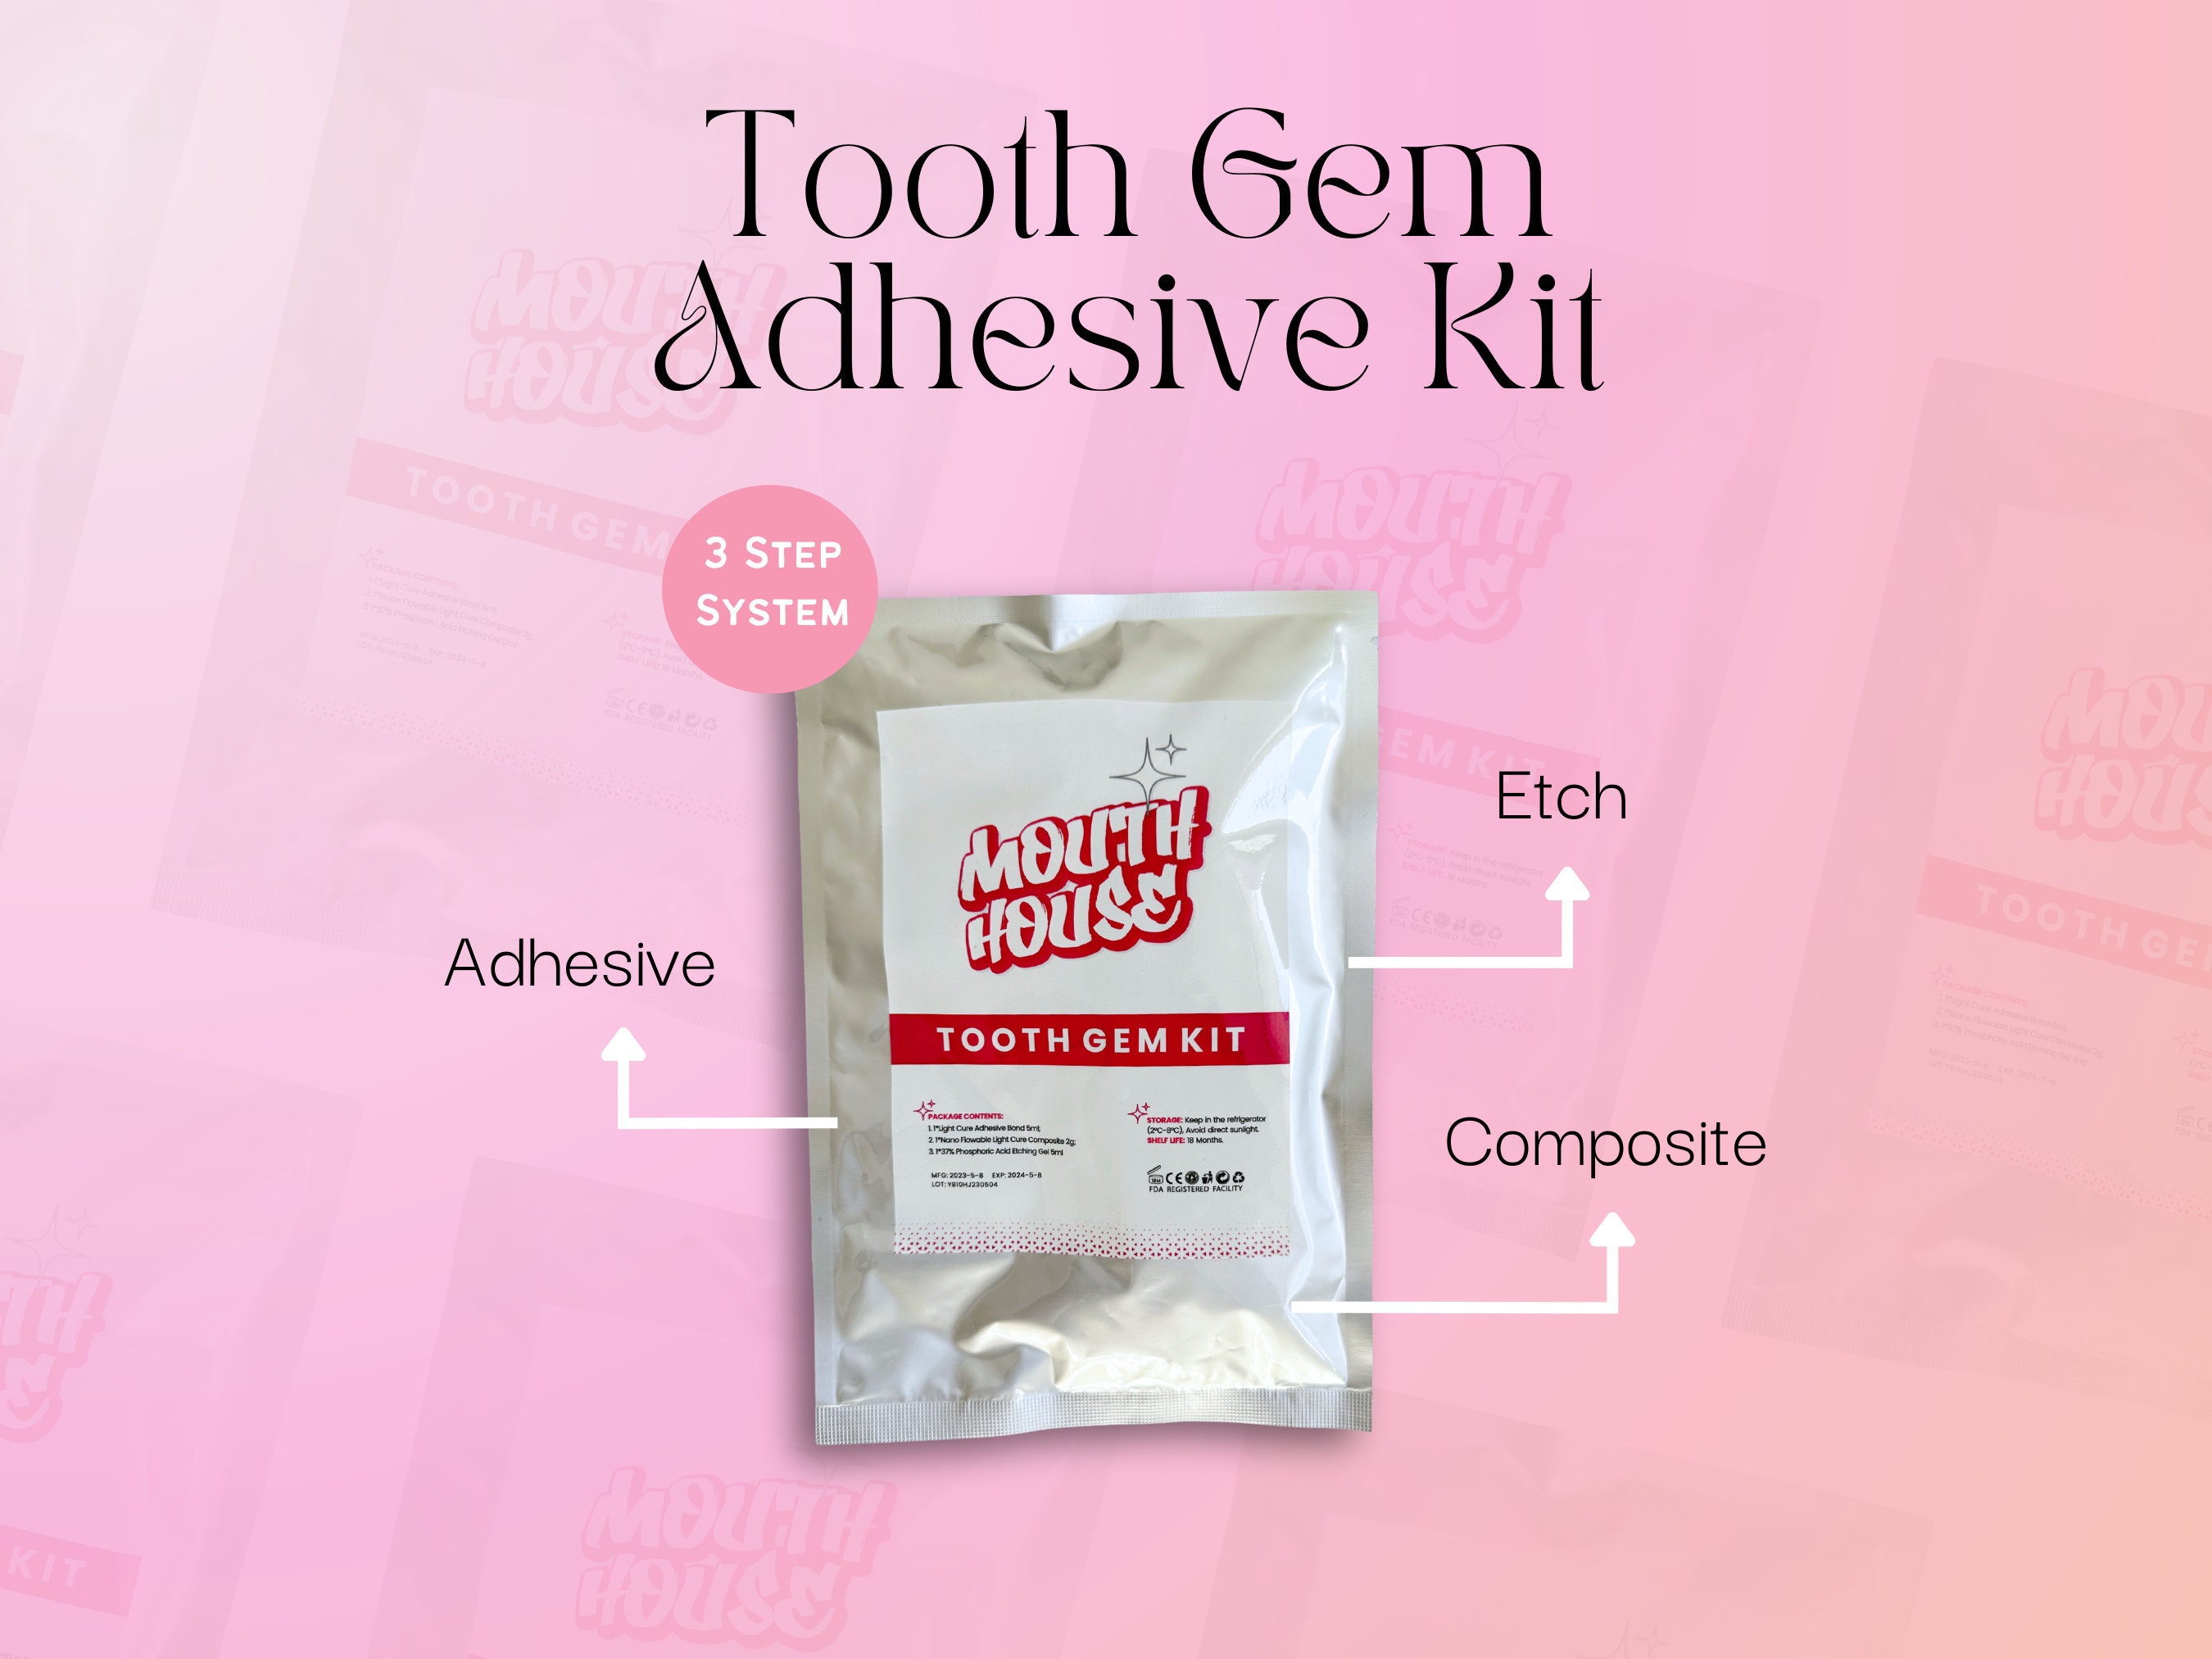 Professional Tooth Gem Adhesive Glue Kit With UV Light PRIMO